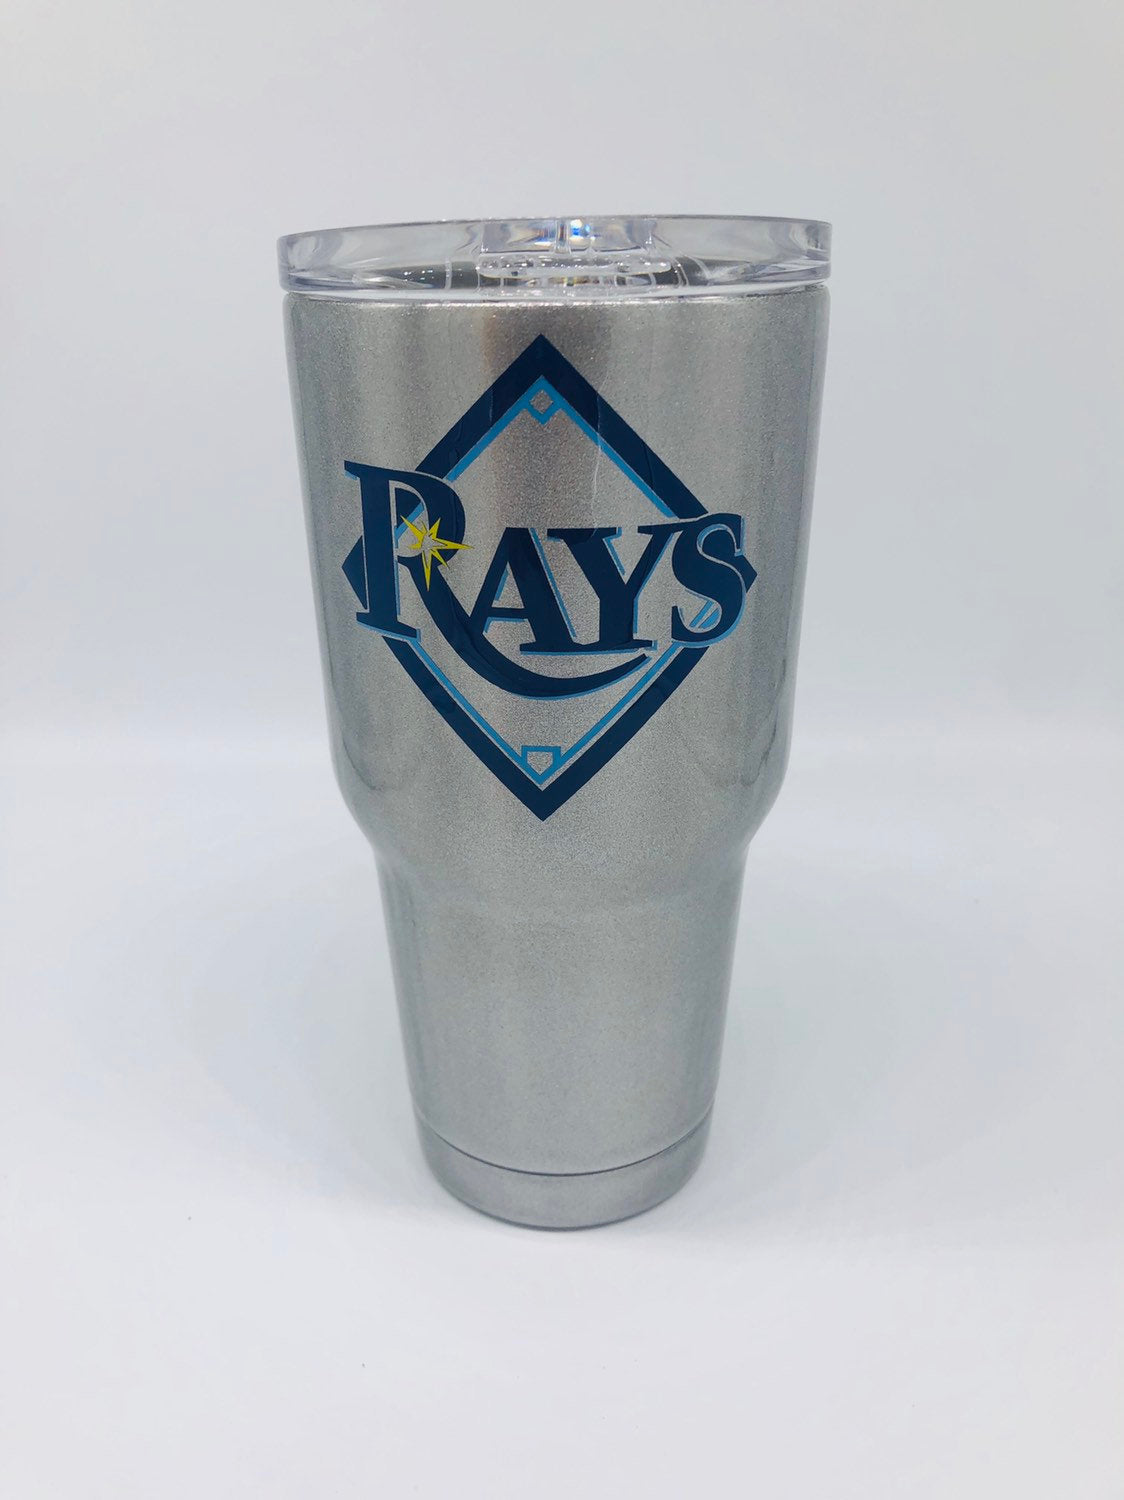 Baseball, Tampa Bay, Tampa Bay Rays, Dad Gift, Baseball Tumbler, Baseball Cup, Rays Cup, Tampa Bay Cup, MLB, Tumbler, Coffee Cup, Sports Cup